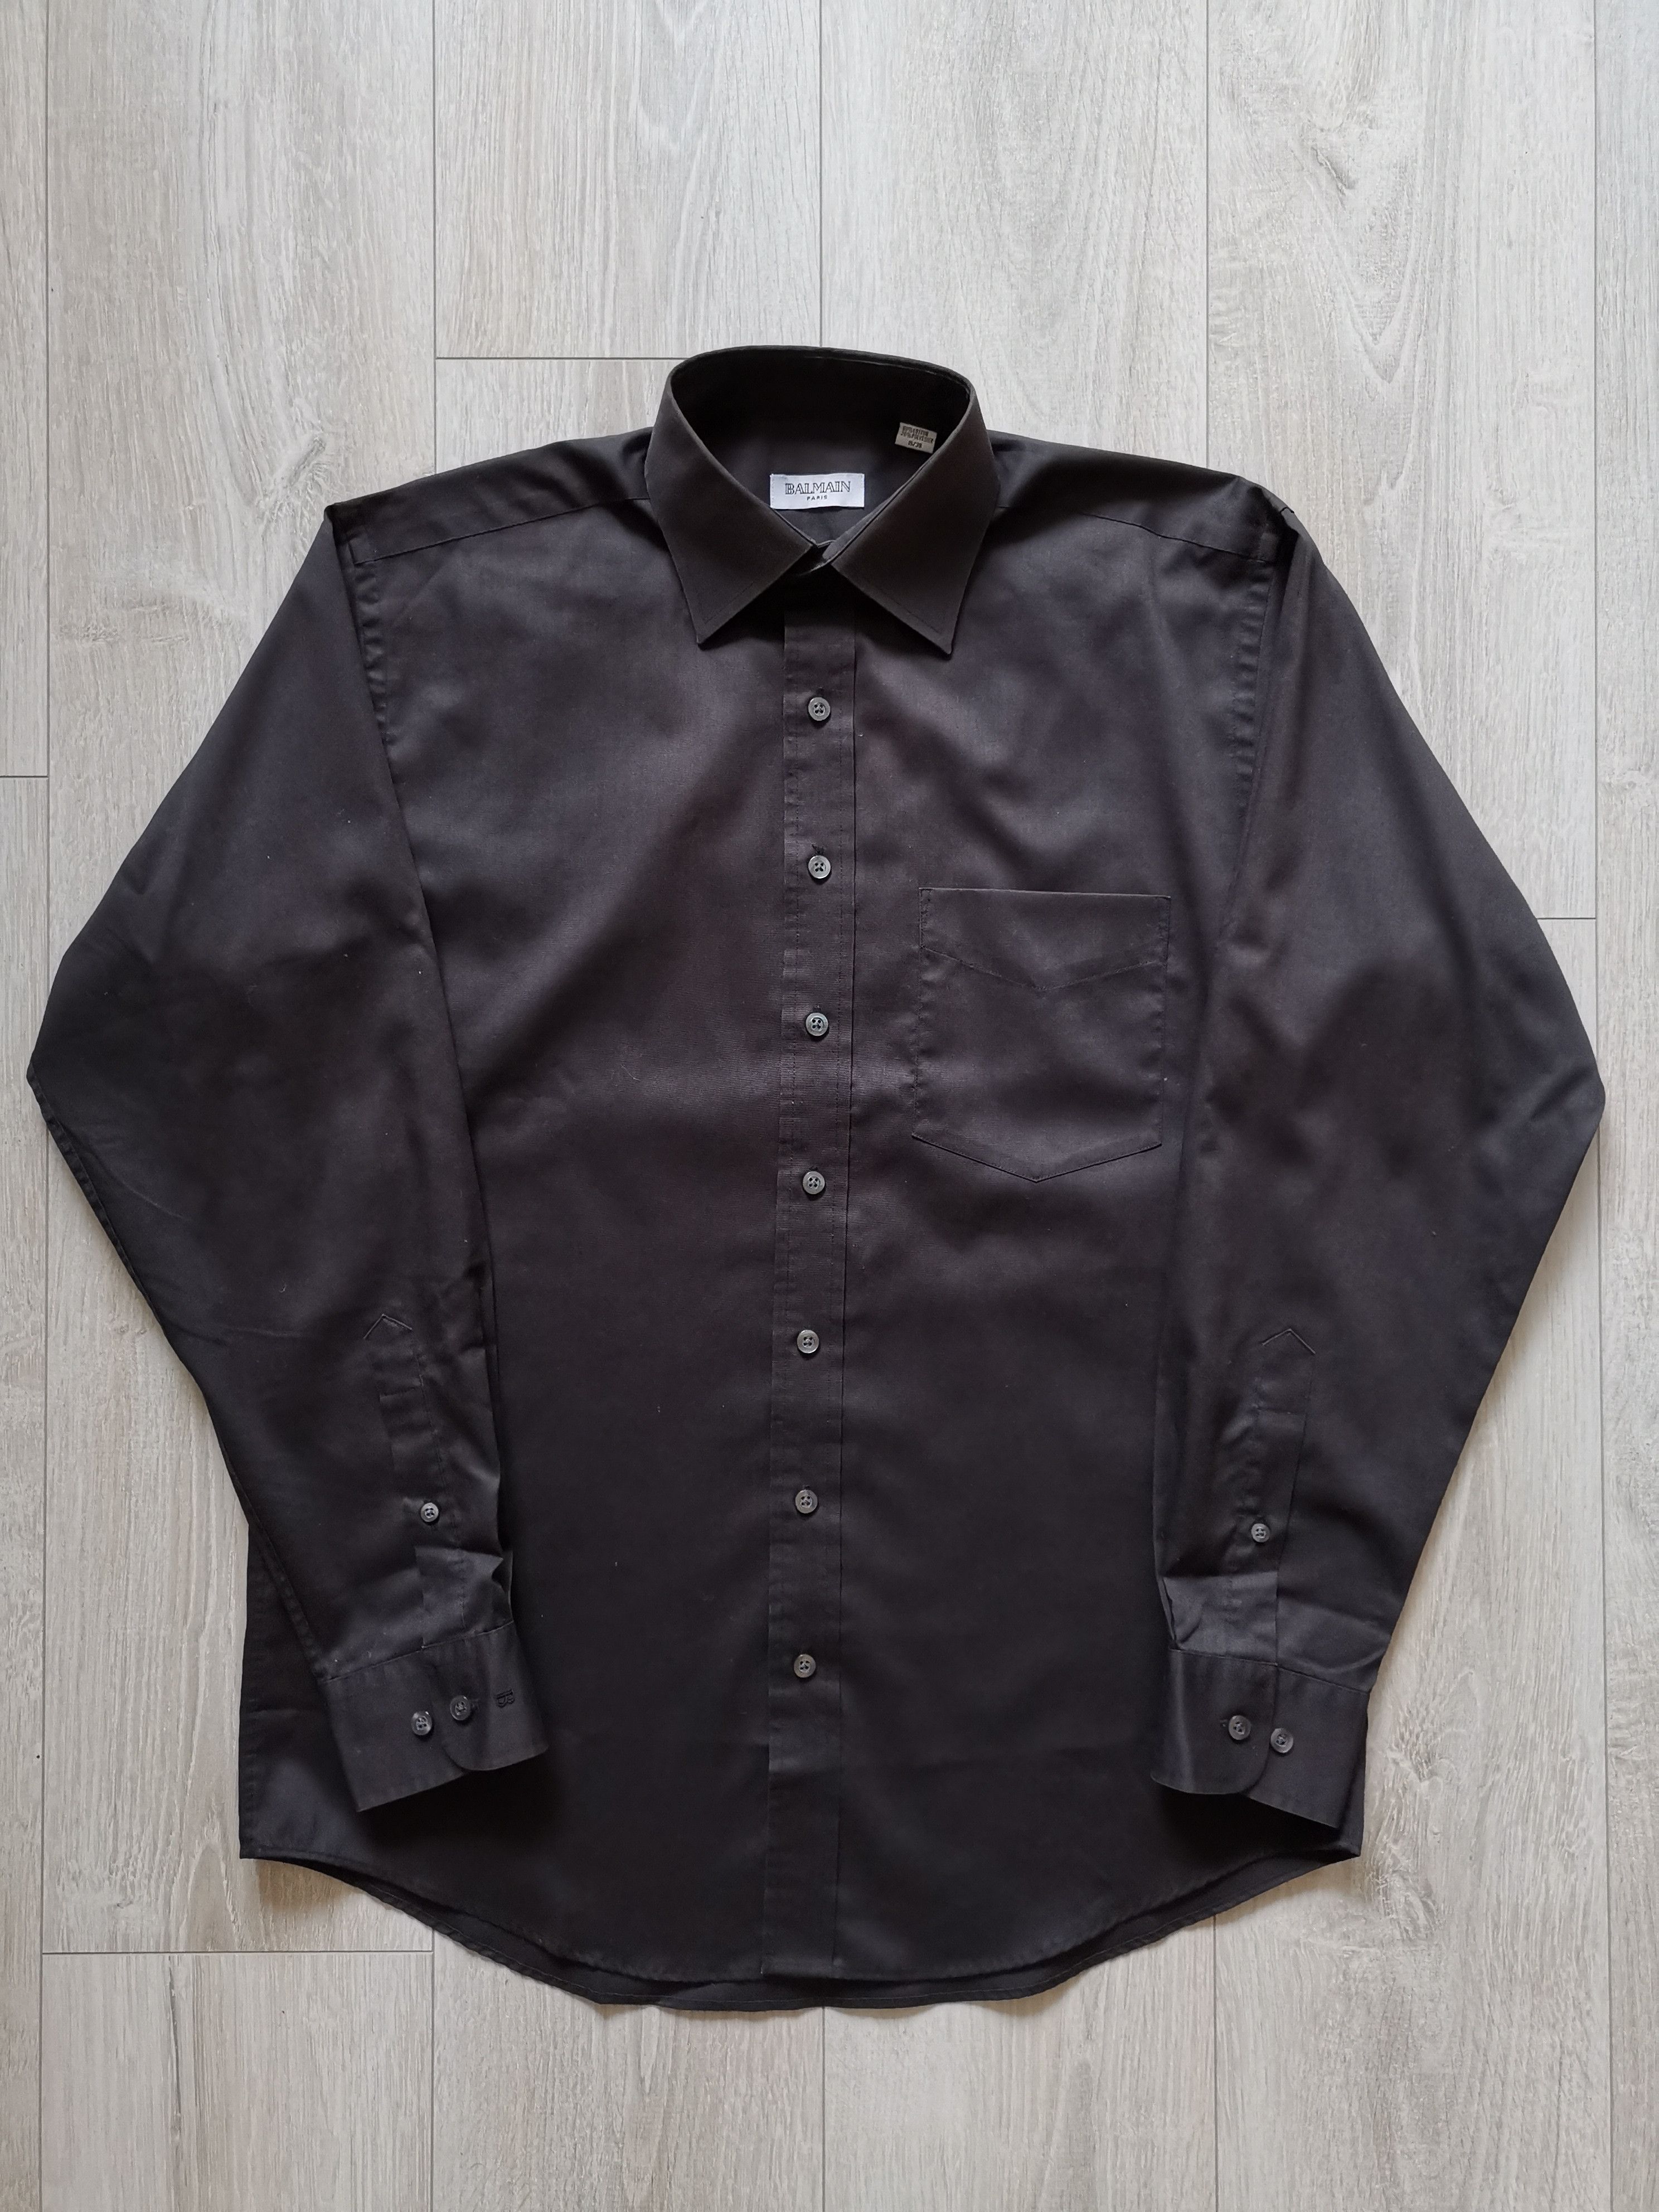 Balmain Balmain black shirt | Grailed